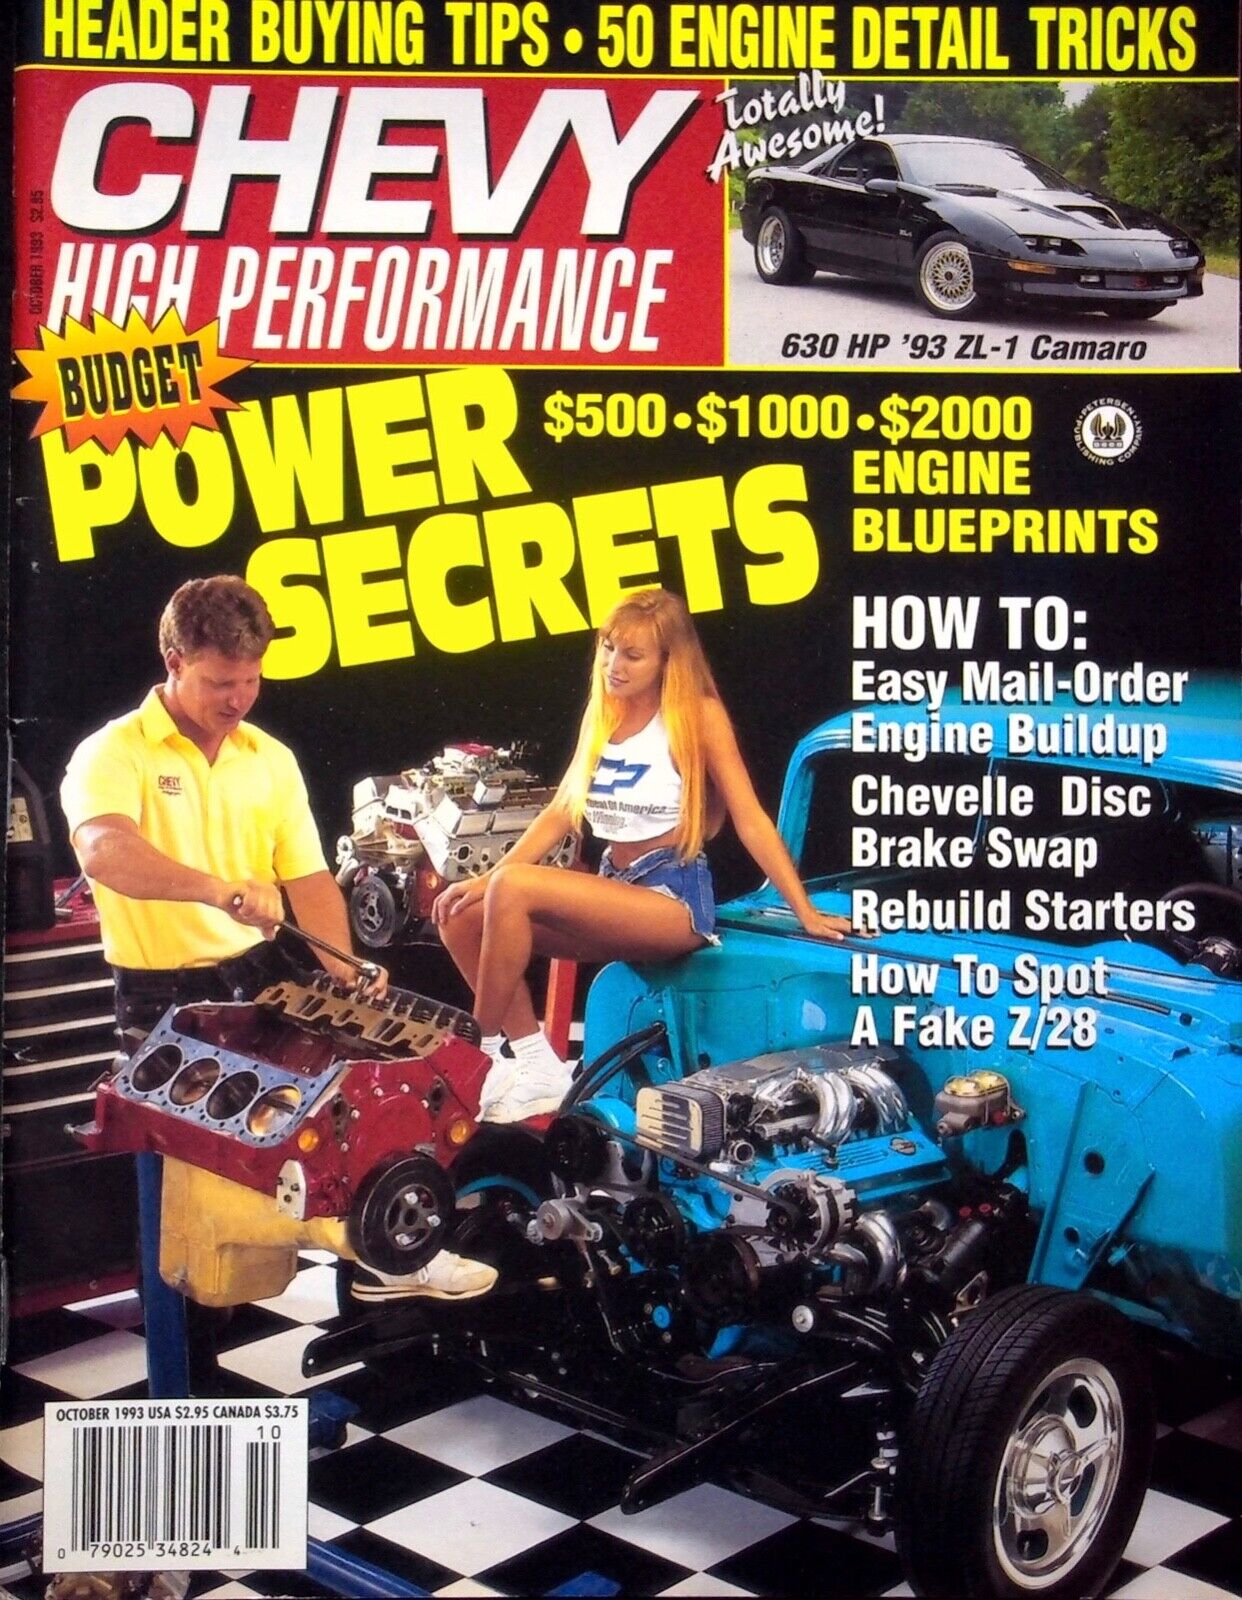 BUDGET POWER SECRETS - CHEVY HIGH PERFORMANCE MAGAZINE, OCTOBER 1993